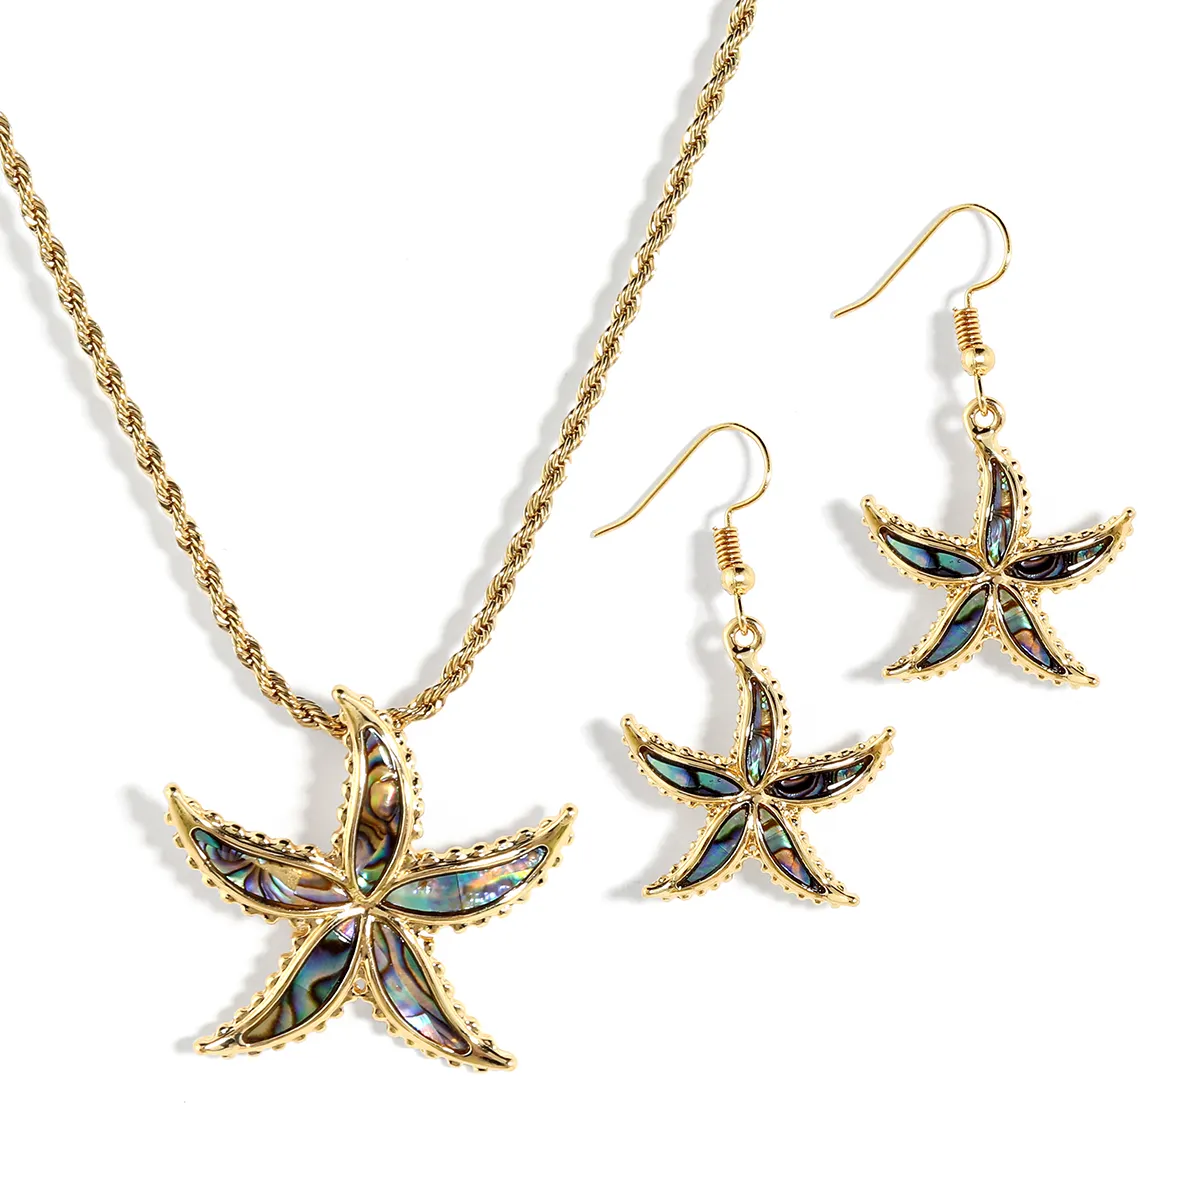 2023 New Hot Selling Fashion necklace earrings brazilian jewelry set 18k gold plated women gift